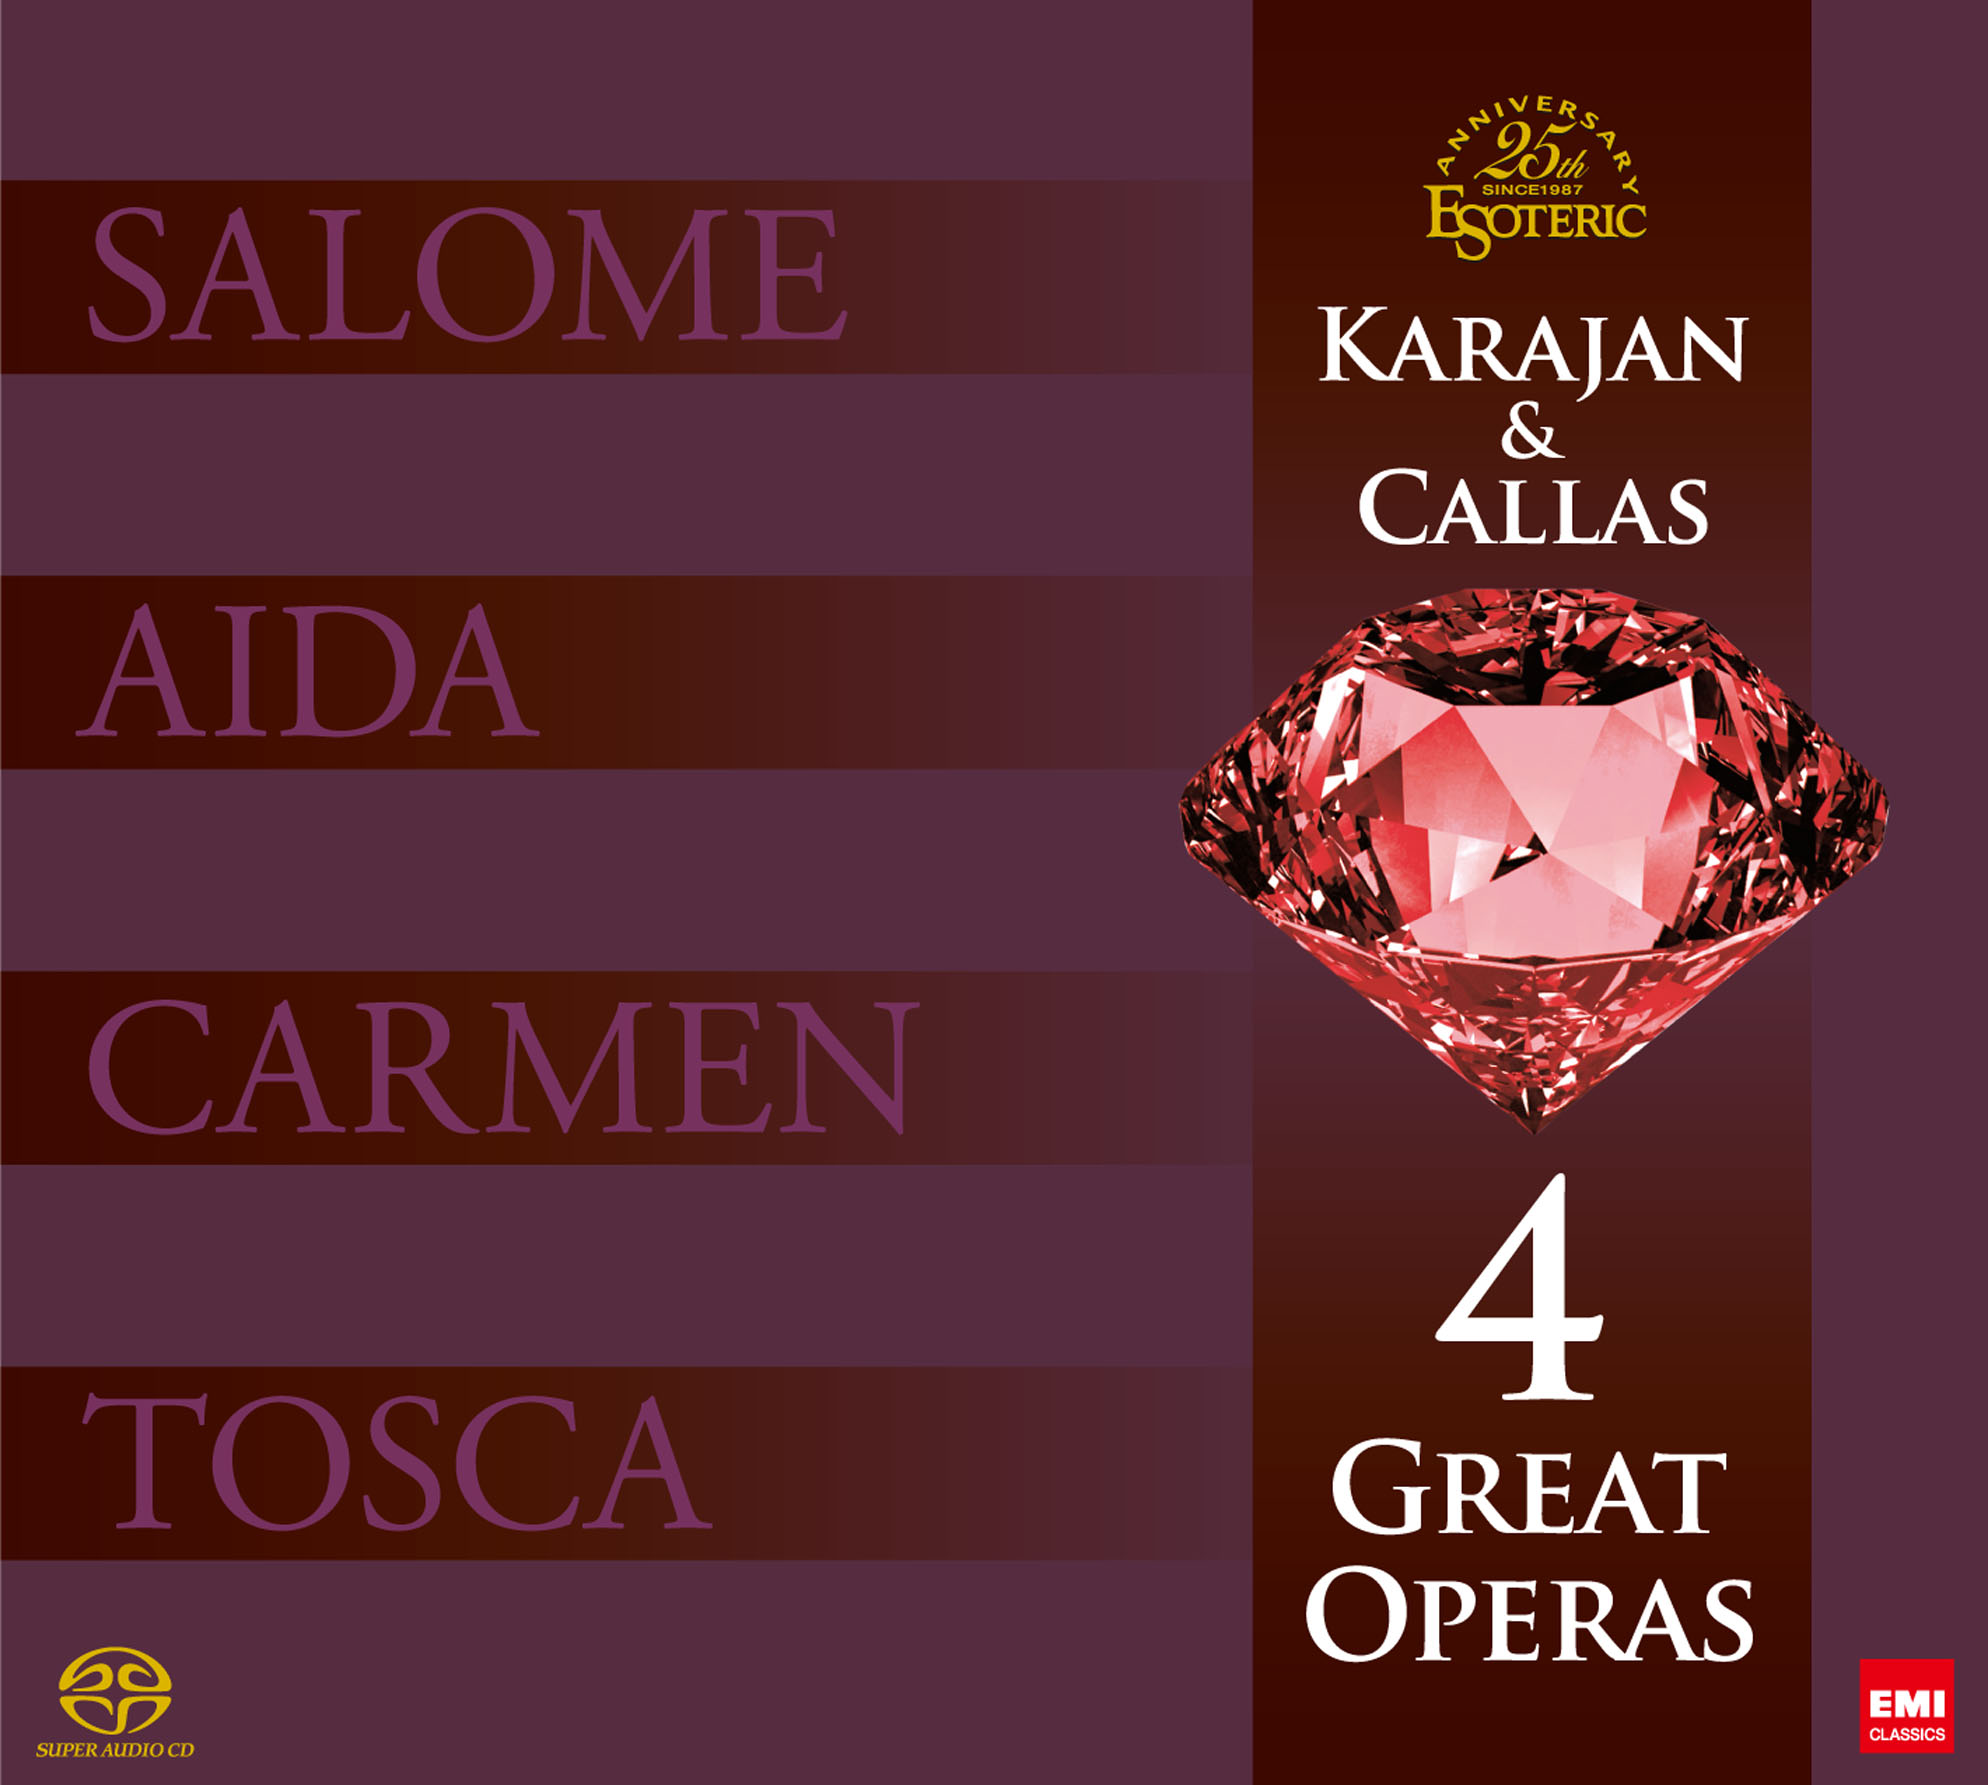 Karajan & Callas 4 Great Operas